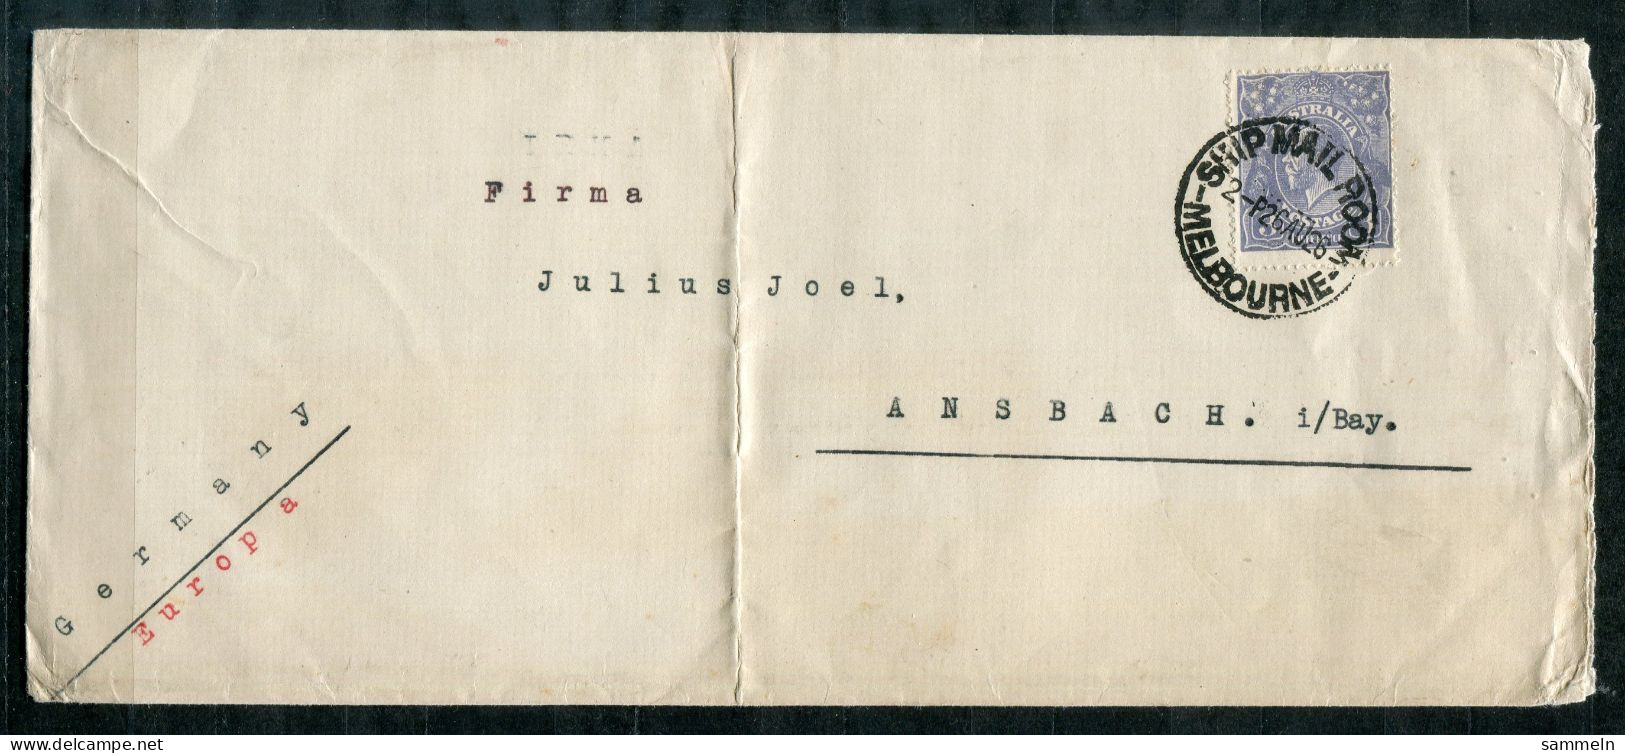 AUSTRALIEN - Brief Von Melbourne "SHIP MAIL ROOM" Nach Ansbach In Bayern - AUSTRALIA - Covers & Documents